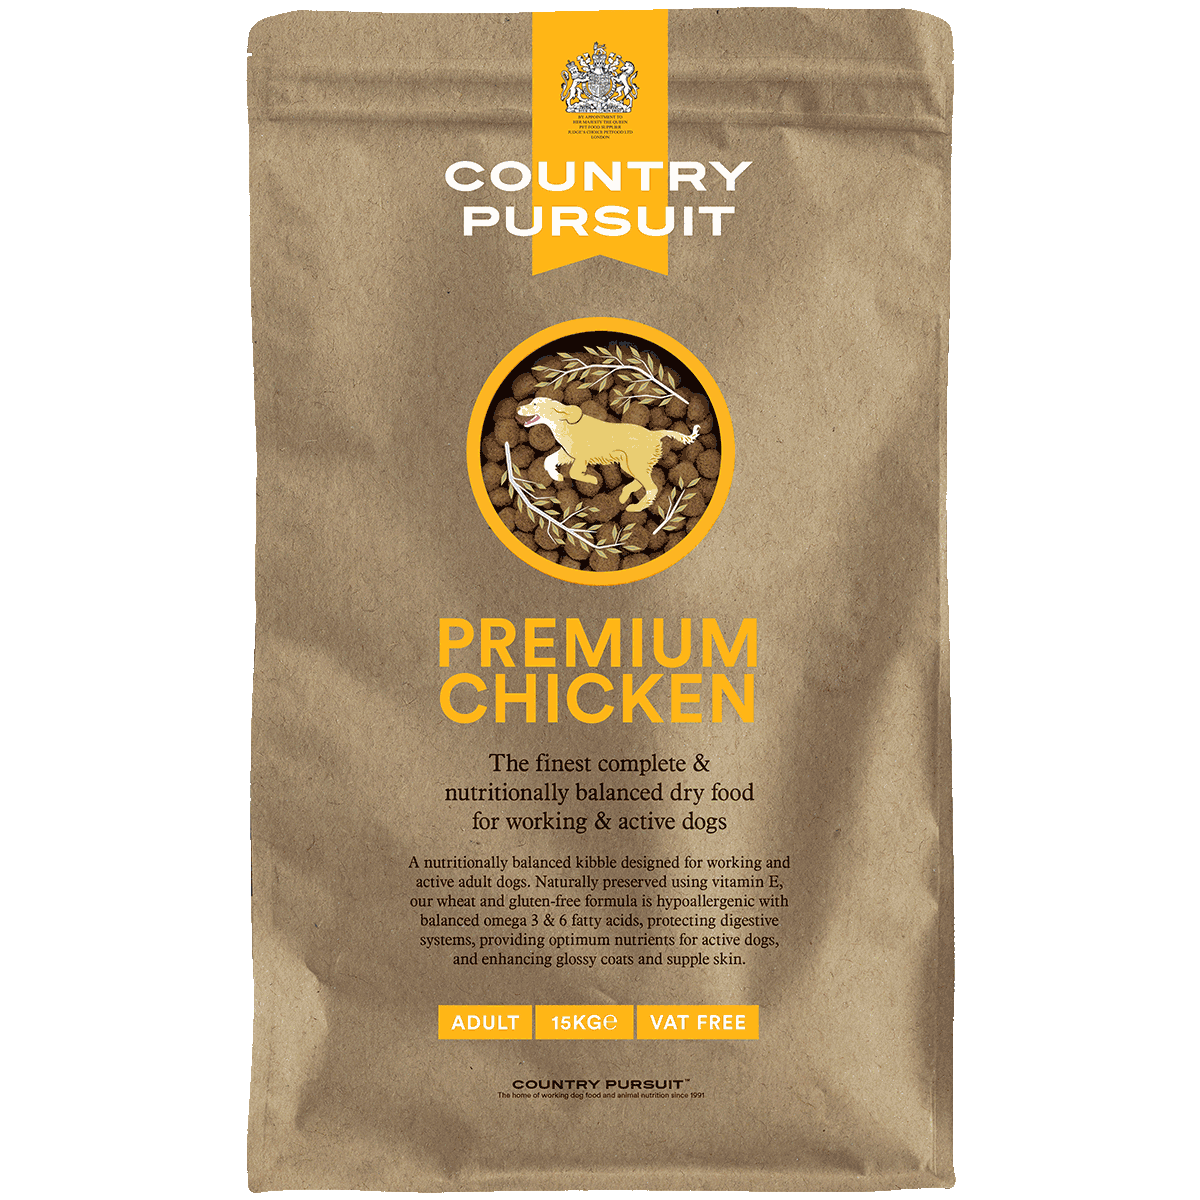 Country Pursuit Premium Chicken dog food 15kg pack shot